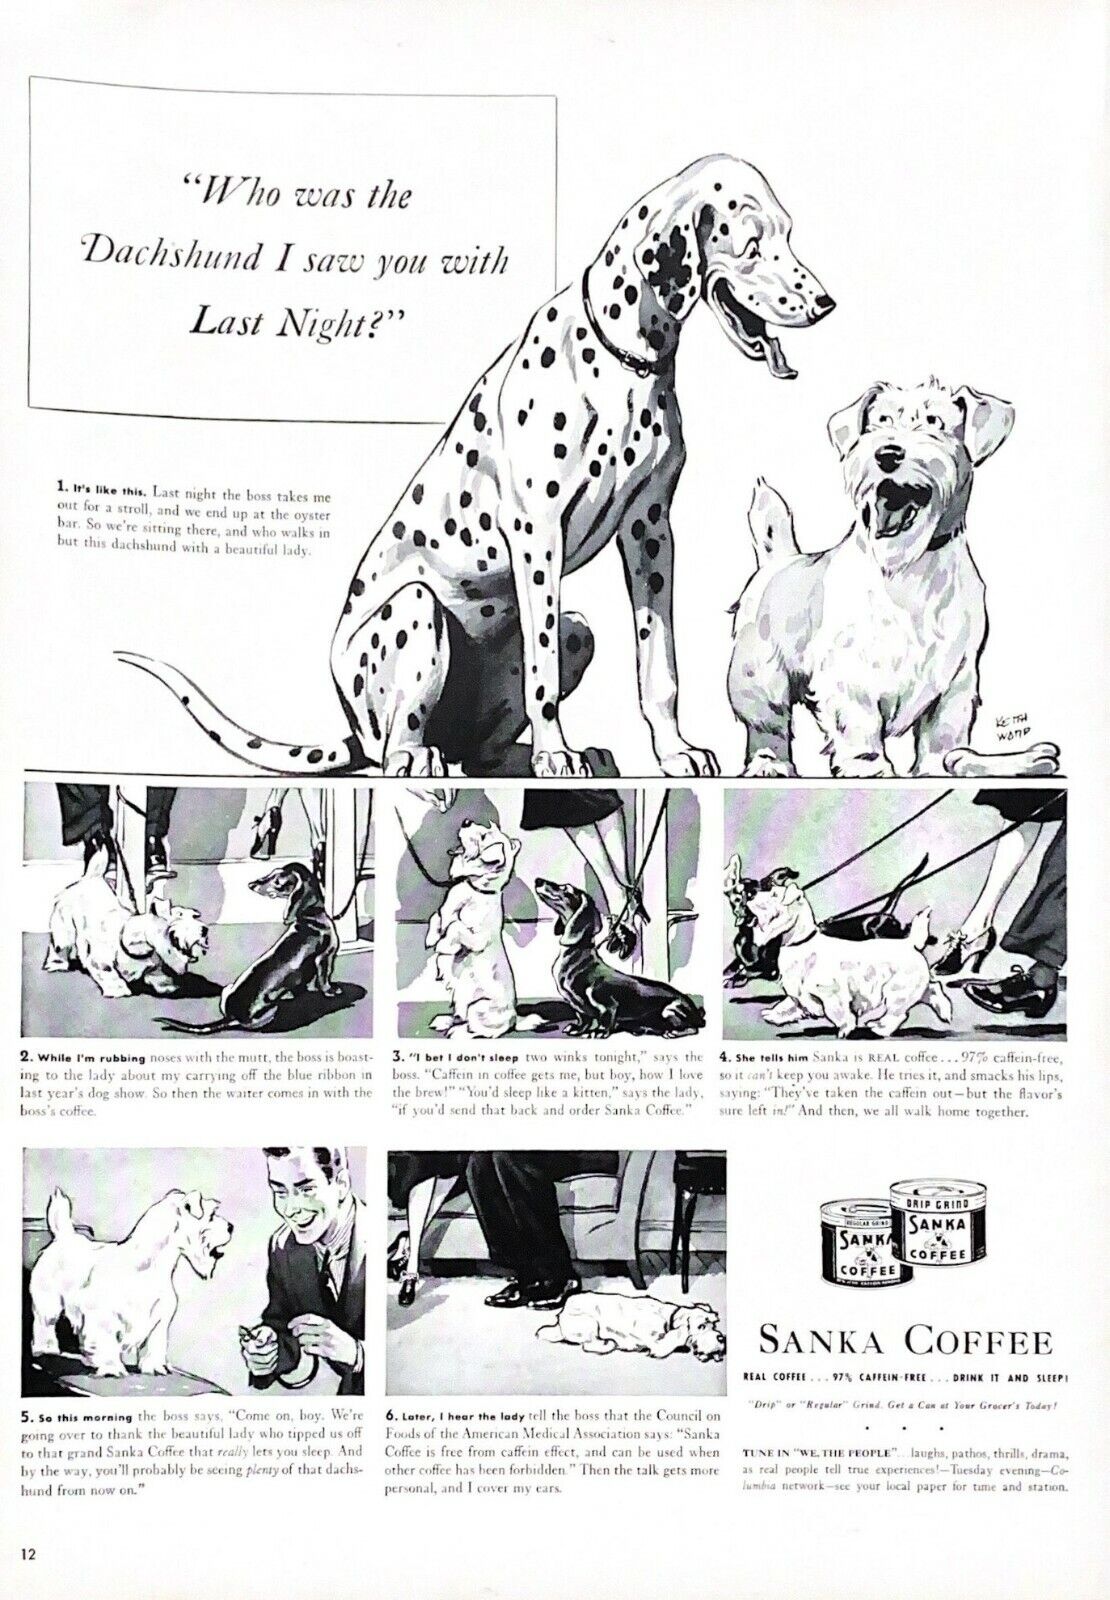 1939 Sanka Coffee Vintage Print Ad Dalmatian Dachshund Cute Dogs 